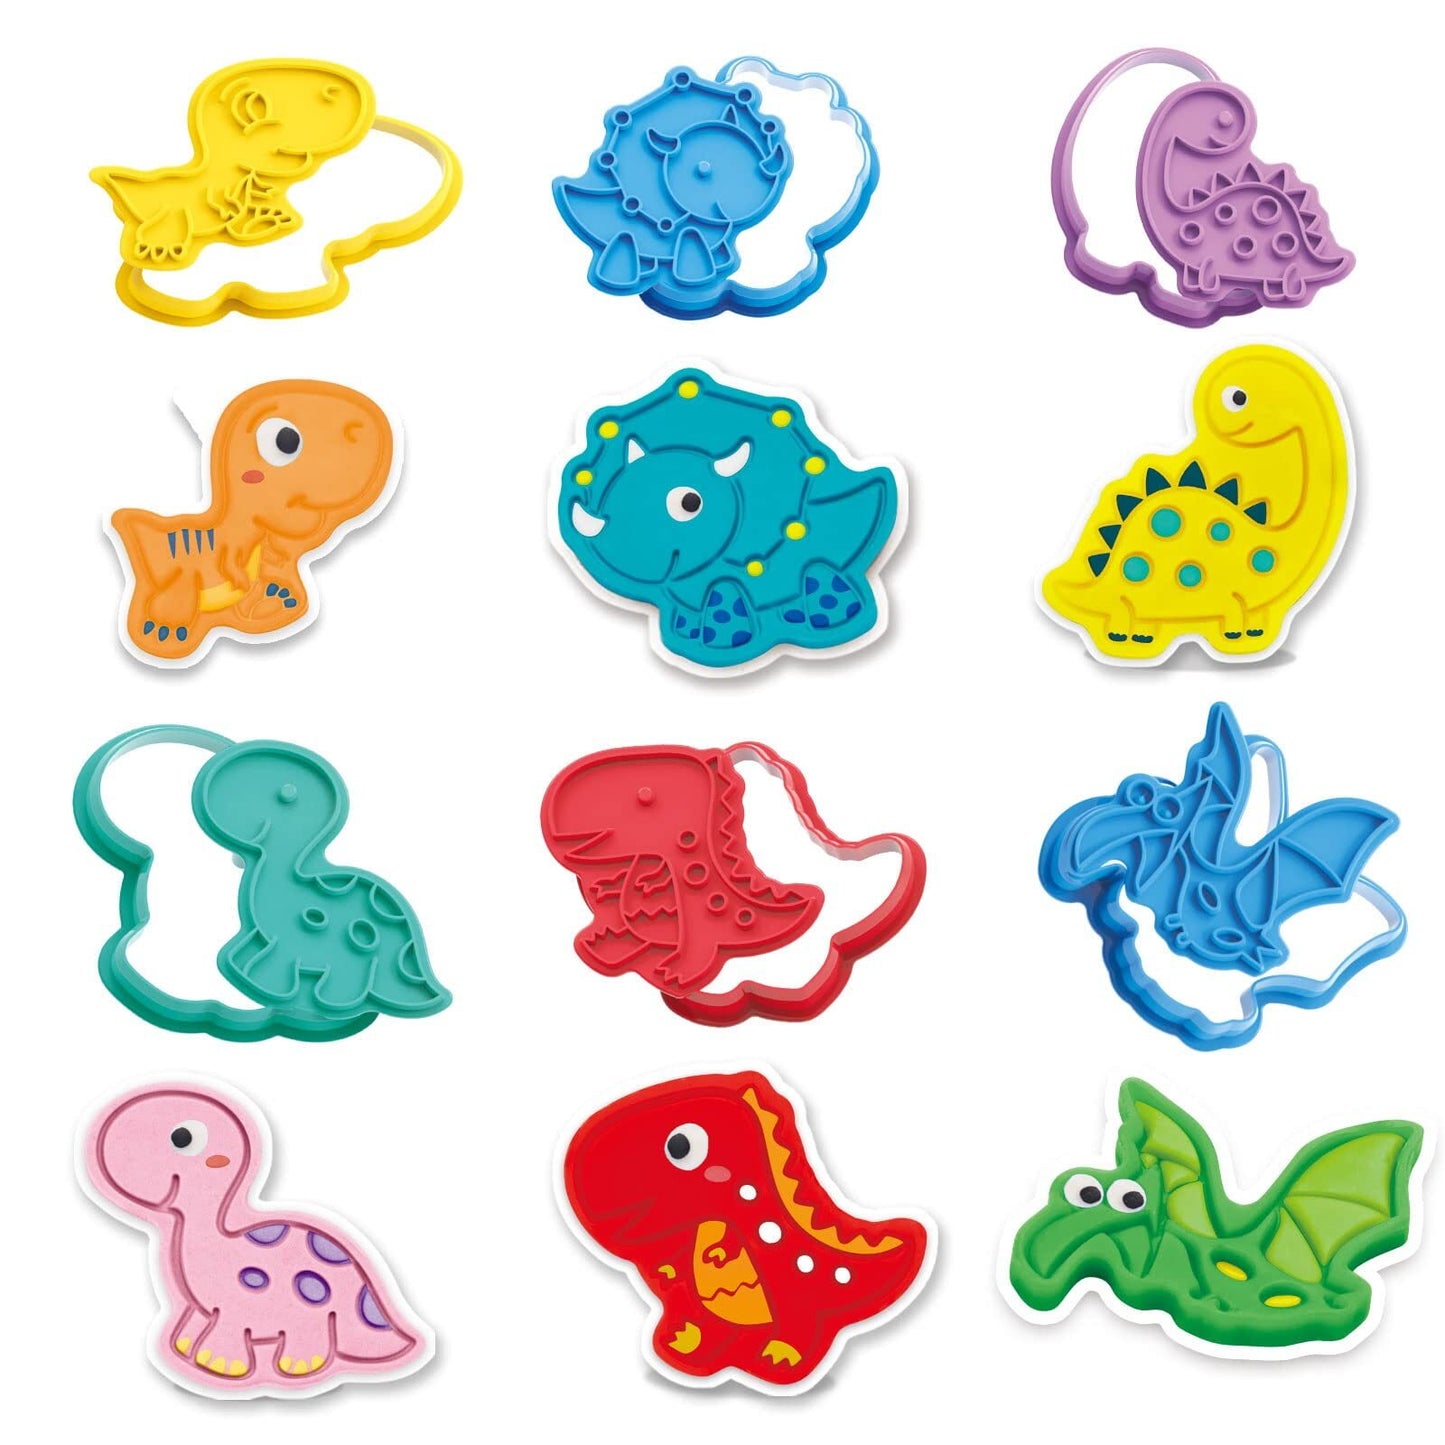 Color Play Dough Dinosaur World Creation Education Toys w/ Animals Pretend Playdough Sets for Kids